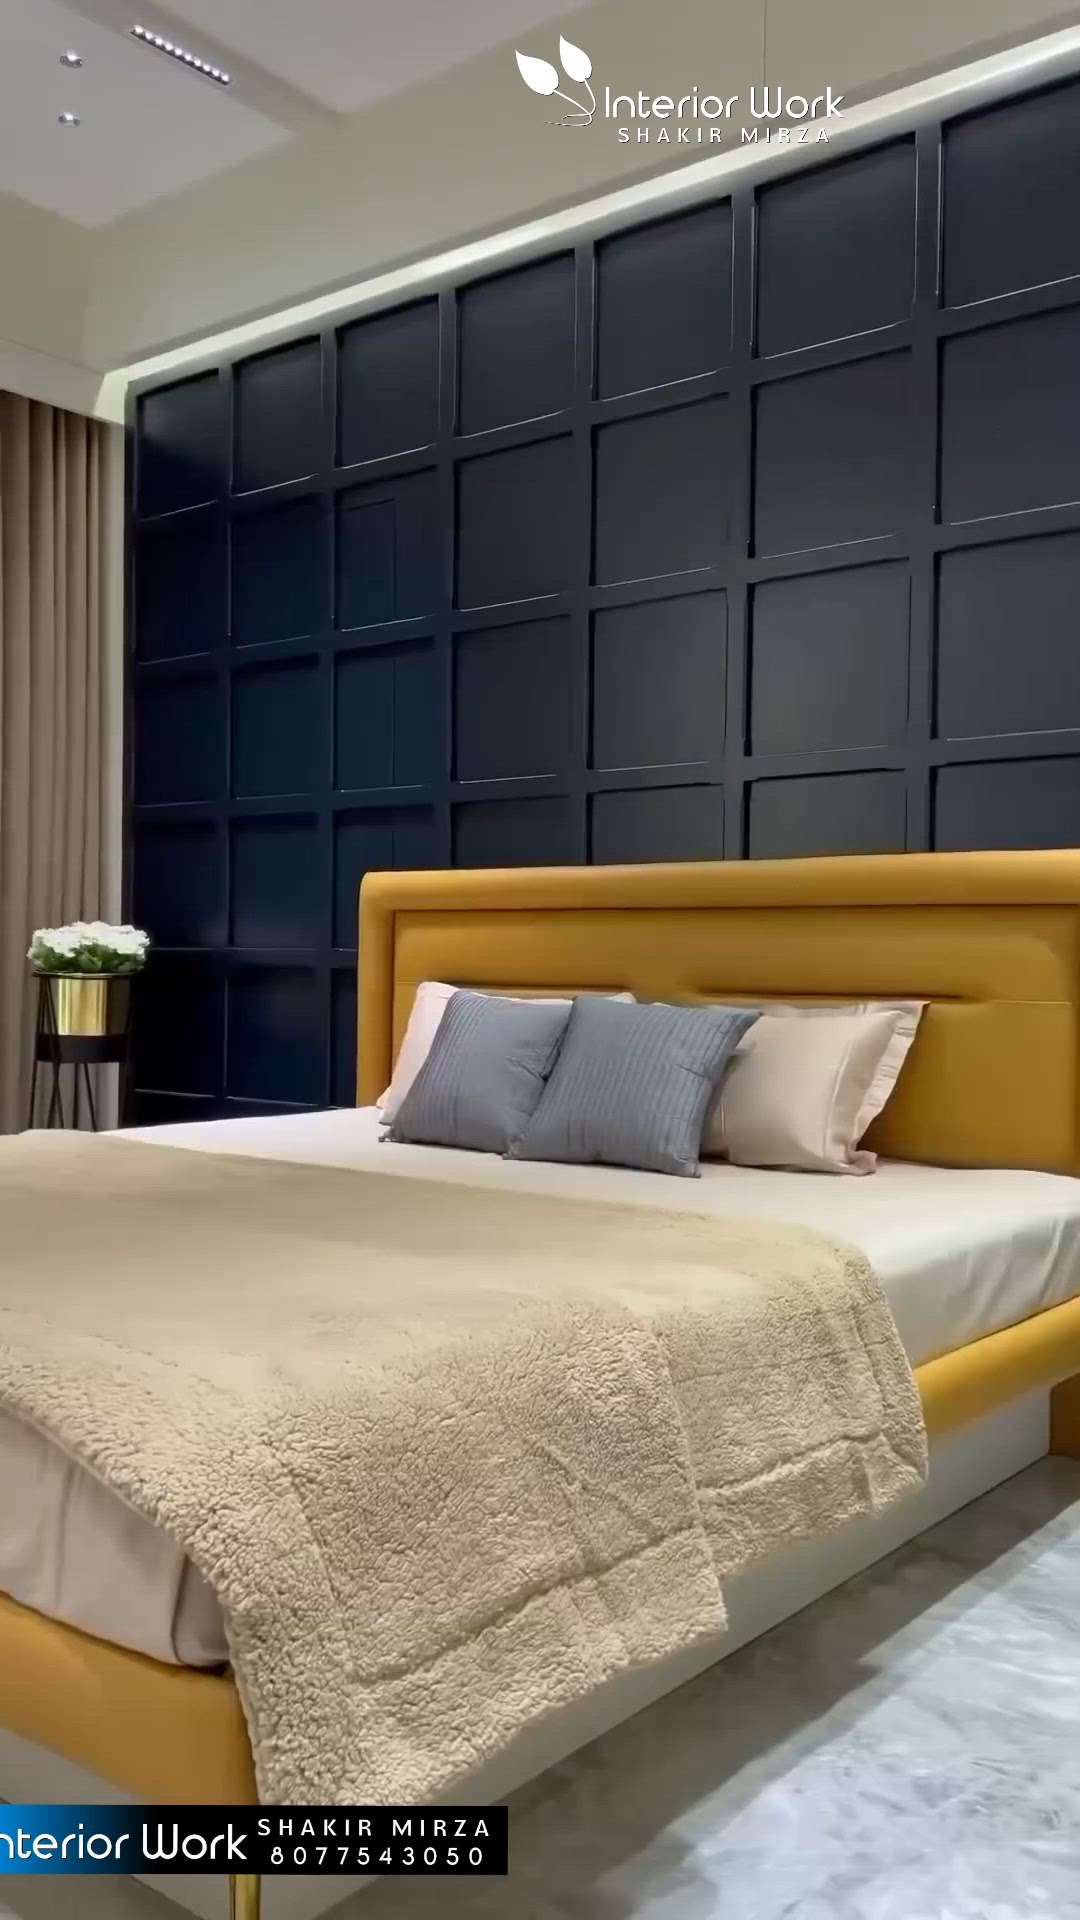 #MasterBedroom #bedroominterio #kidsroom👶 #WallDesigns #furnturedesign_work_karane_ka_liya_contact_kare_8077543050